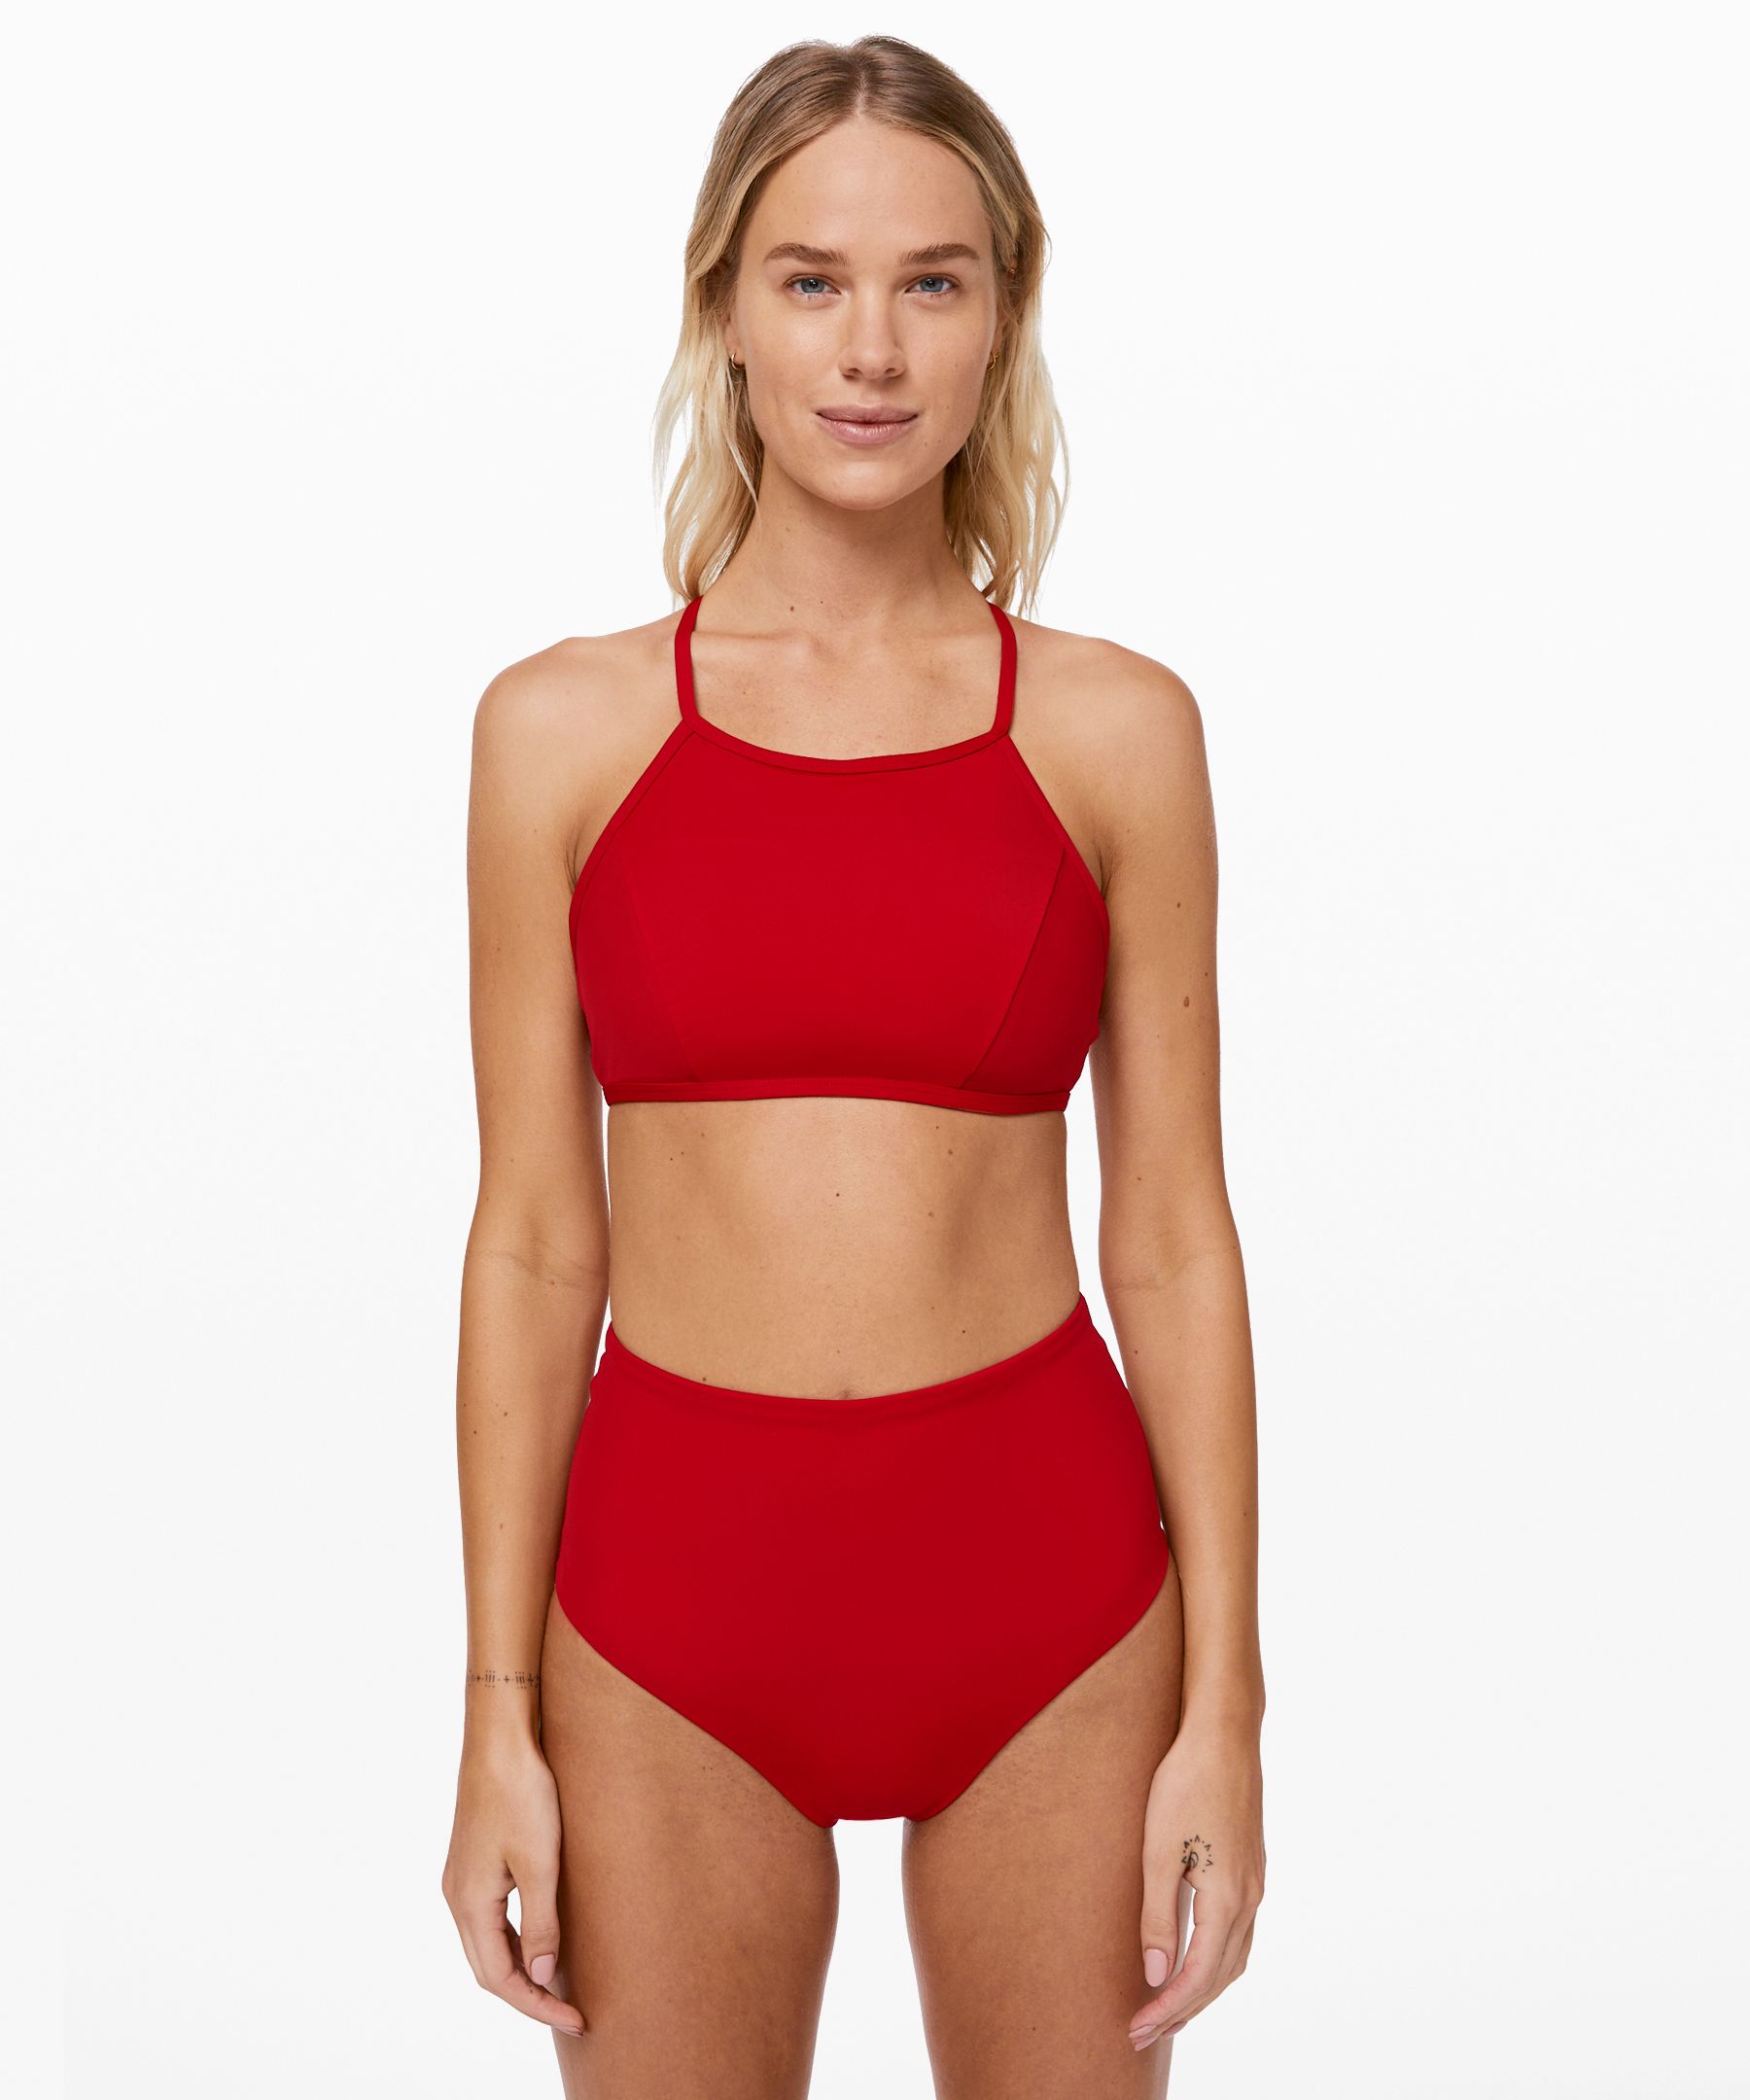 lululemon swimwear canada, OFF 79%,Buy!